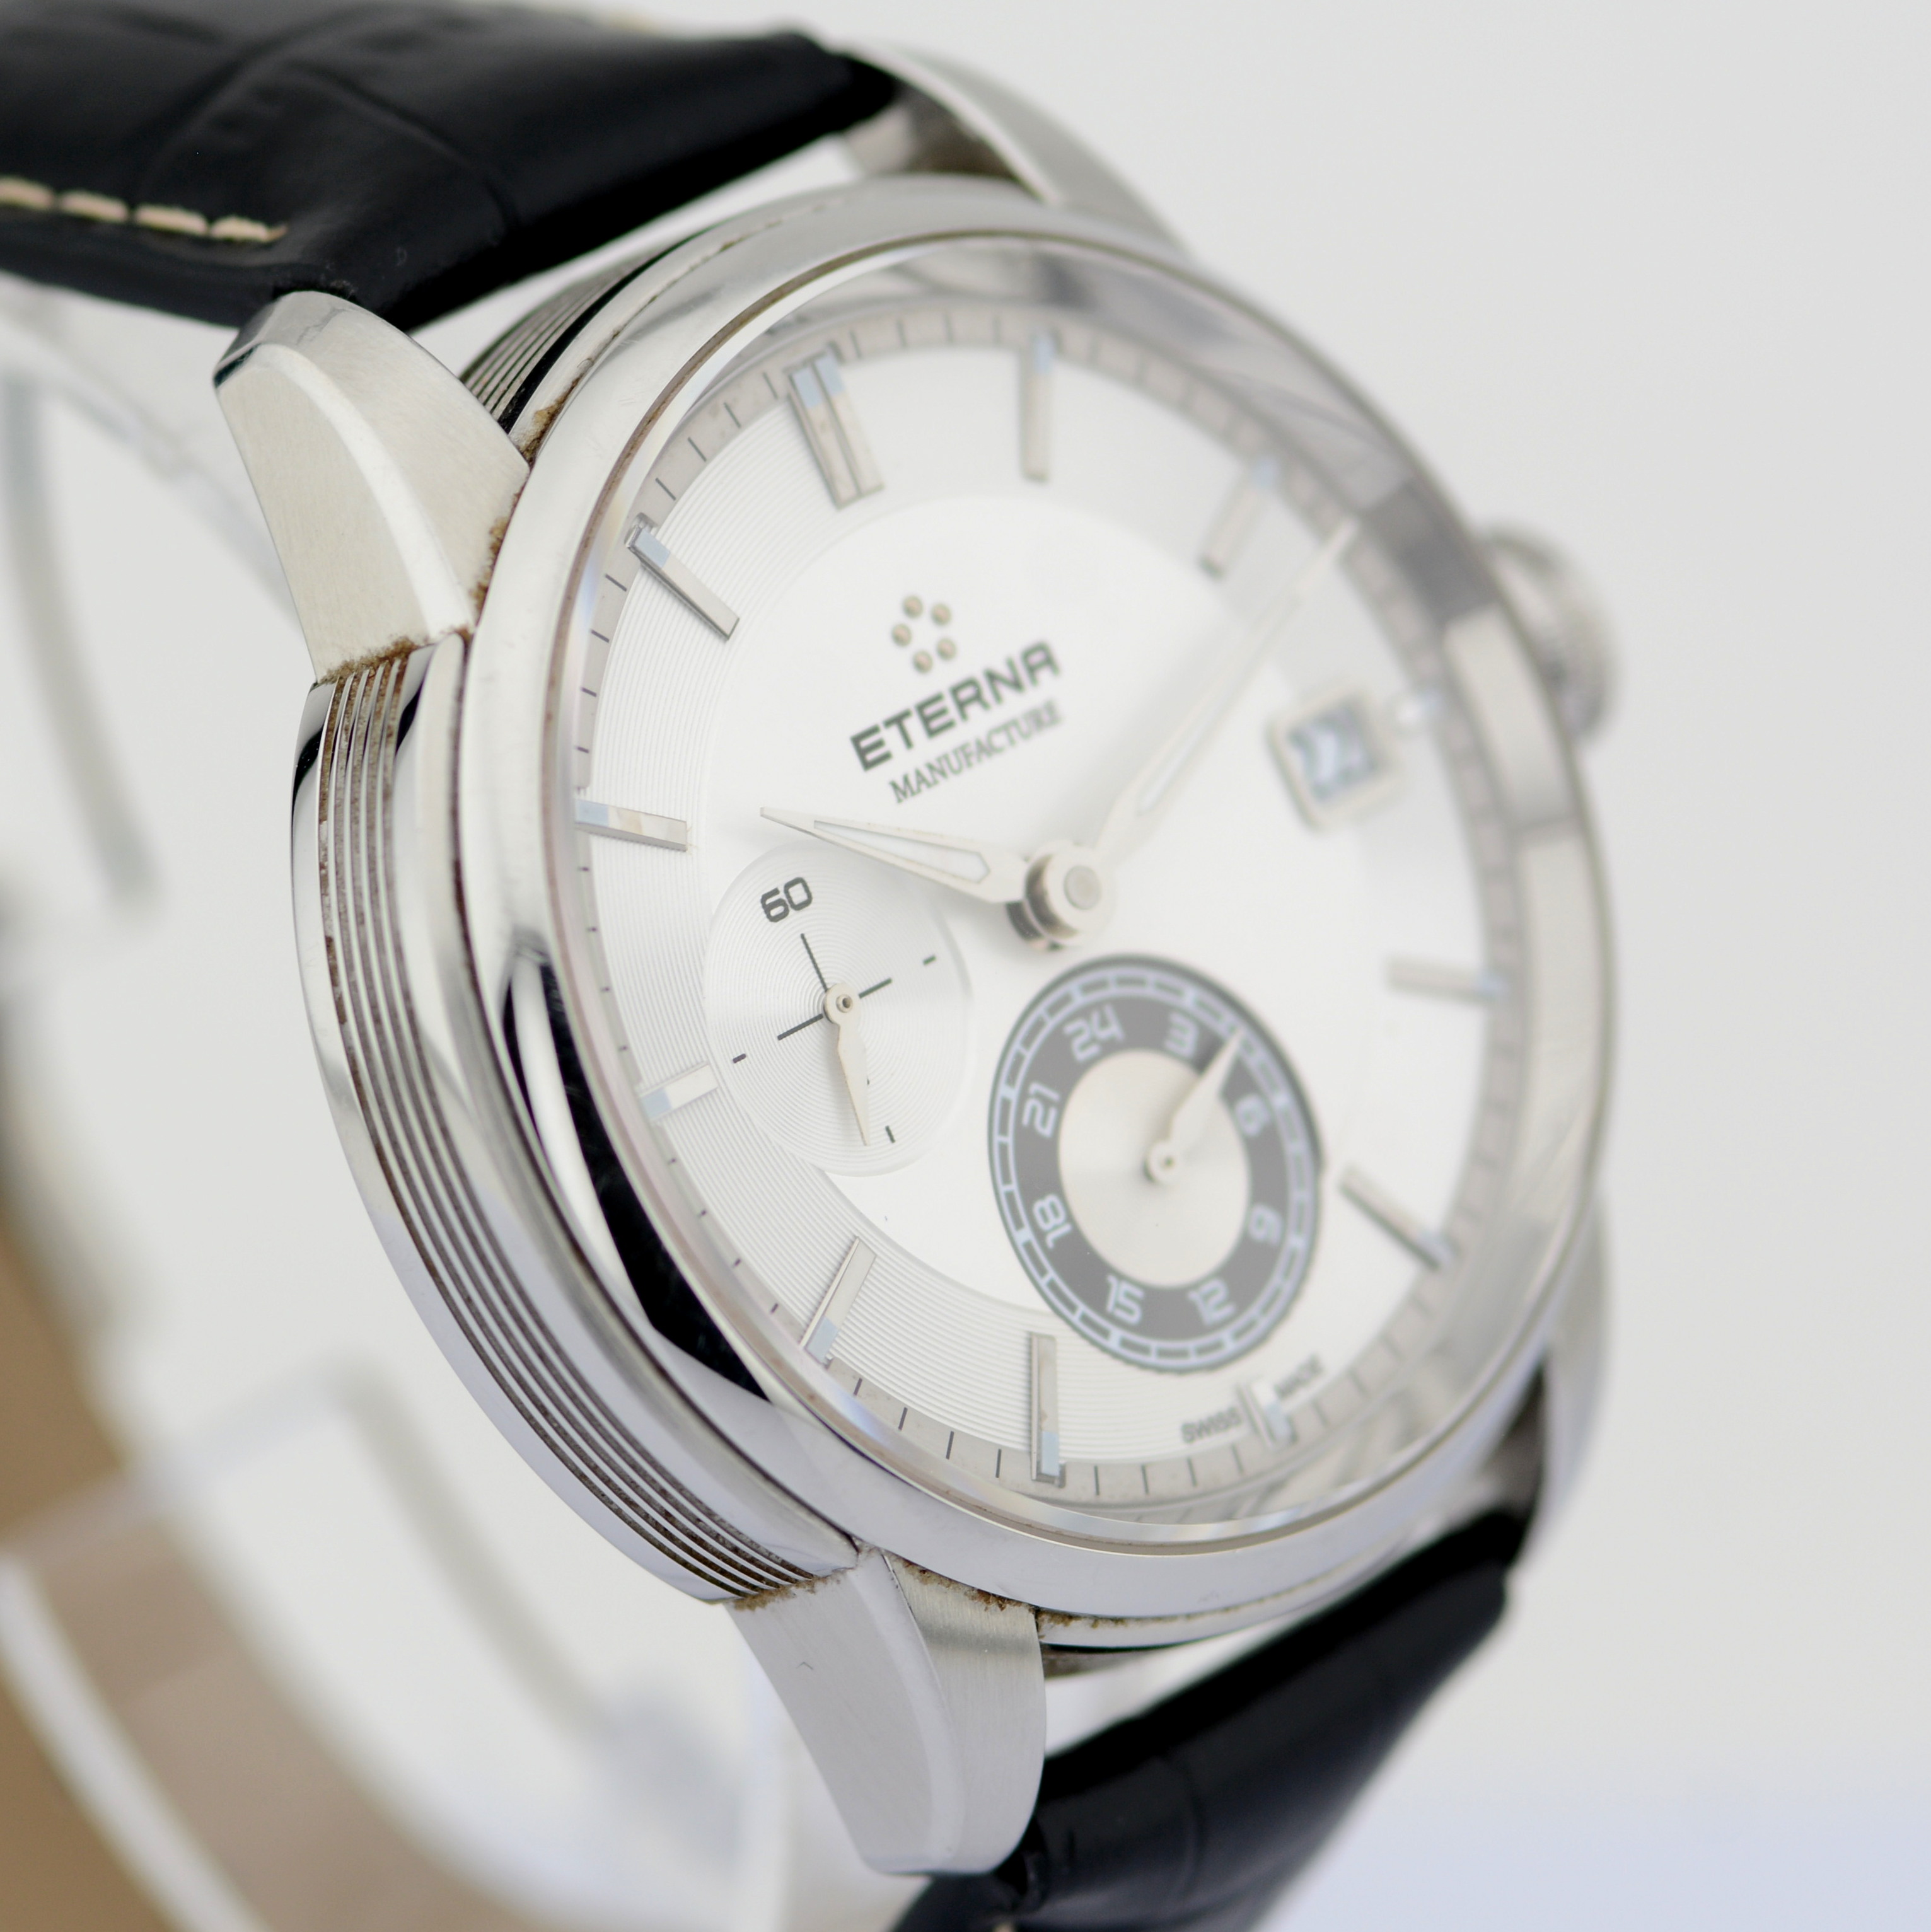 Eterna / Adventic GMT Manufacture Automatic Date - Gentlmen's Steel Wrist Watch - Image 5 of 10